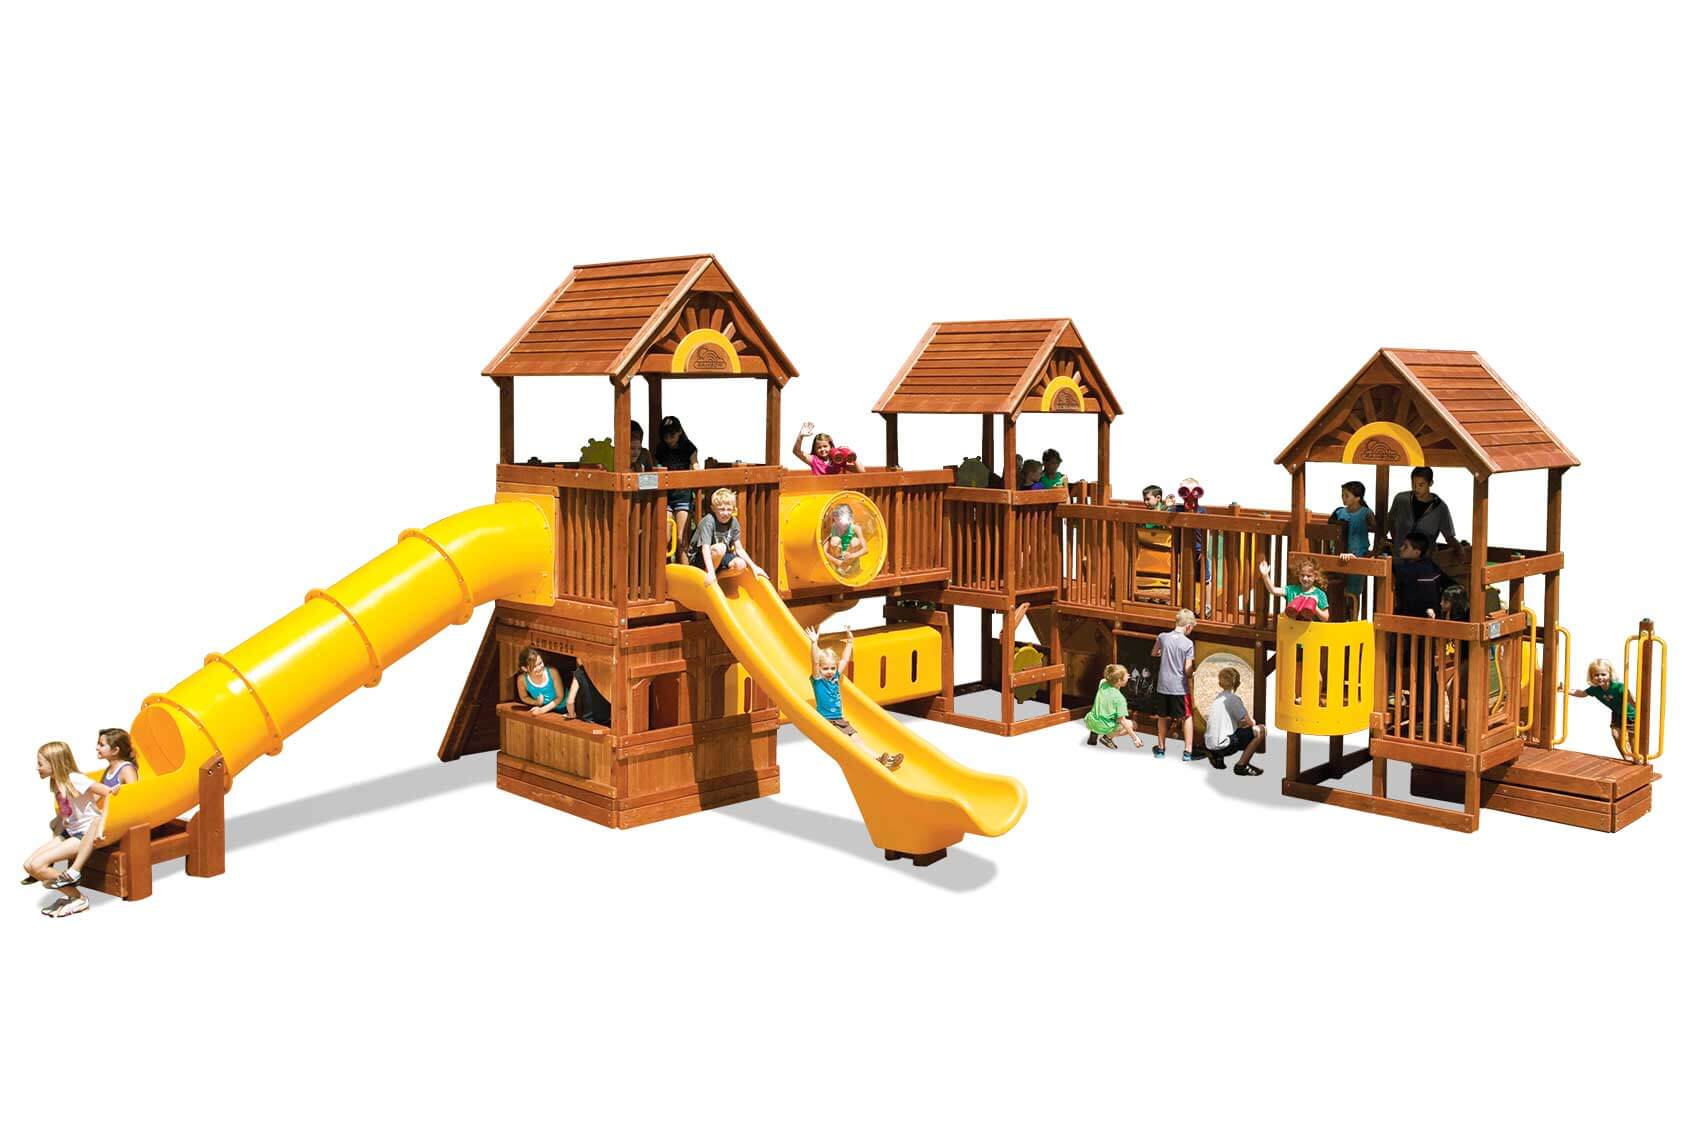 Commercial Playground Equipment – Rainbow Play Village Design C (RPS-98C)